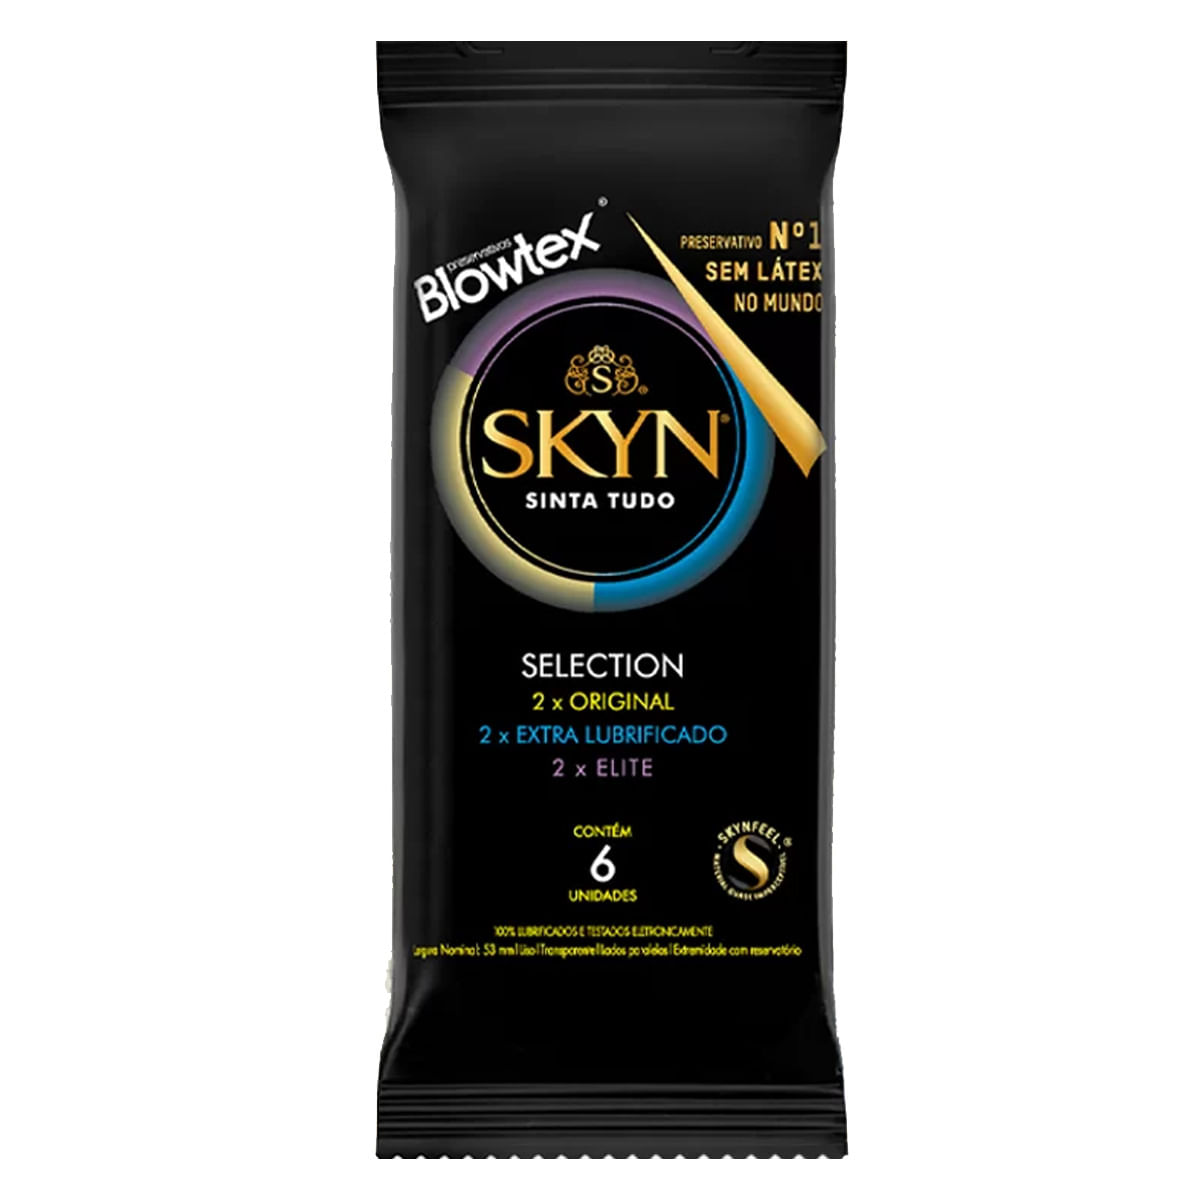 Skyn Selection Preservativo Lubrificado com 6 unidades Blowtex